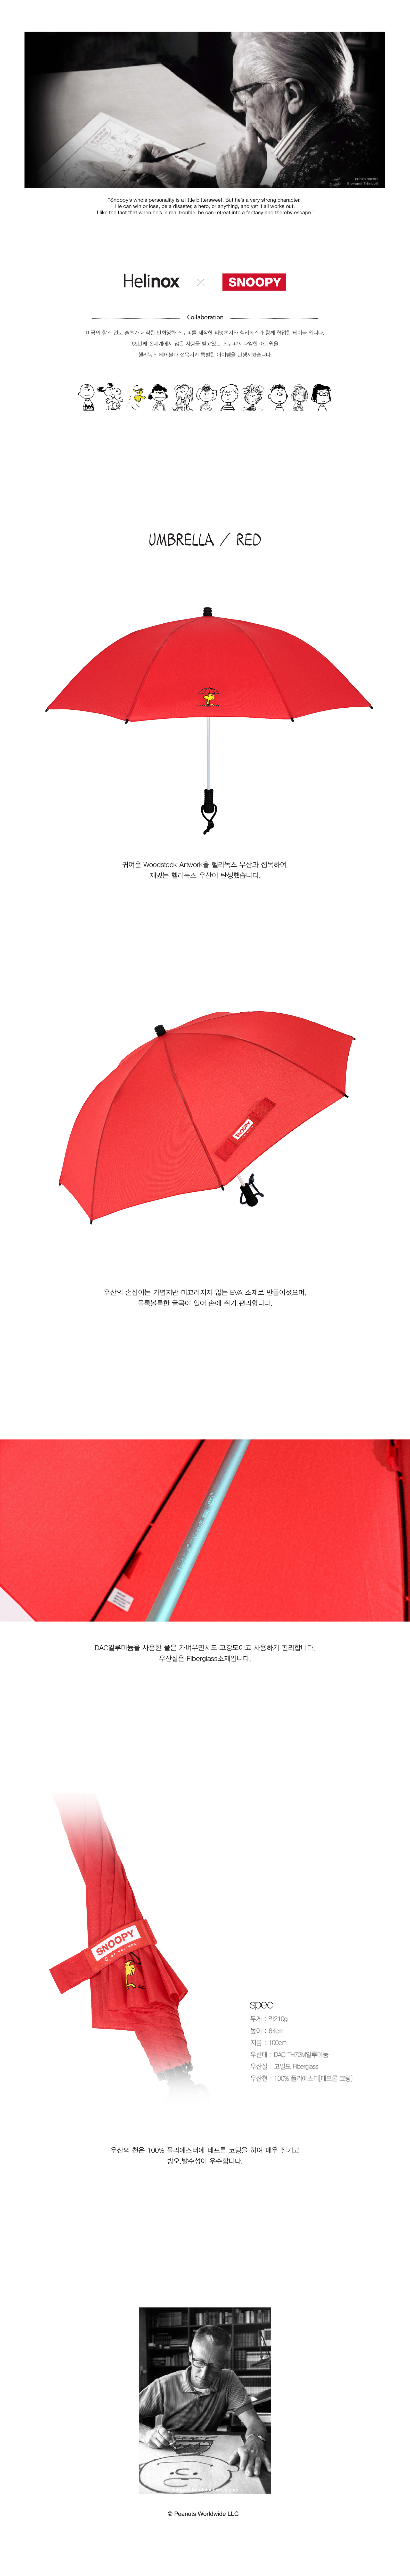 20150608 Snoopy x Helinox Umbrella-02.jpg